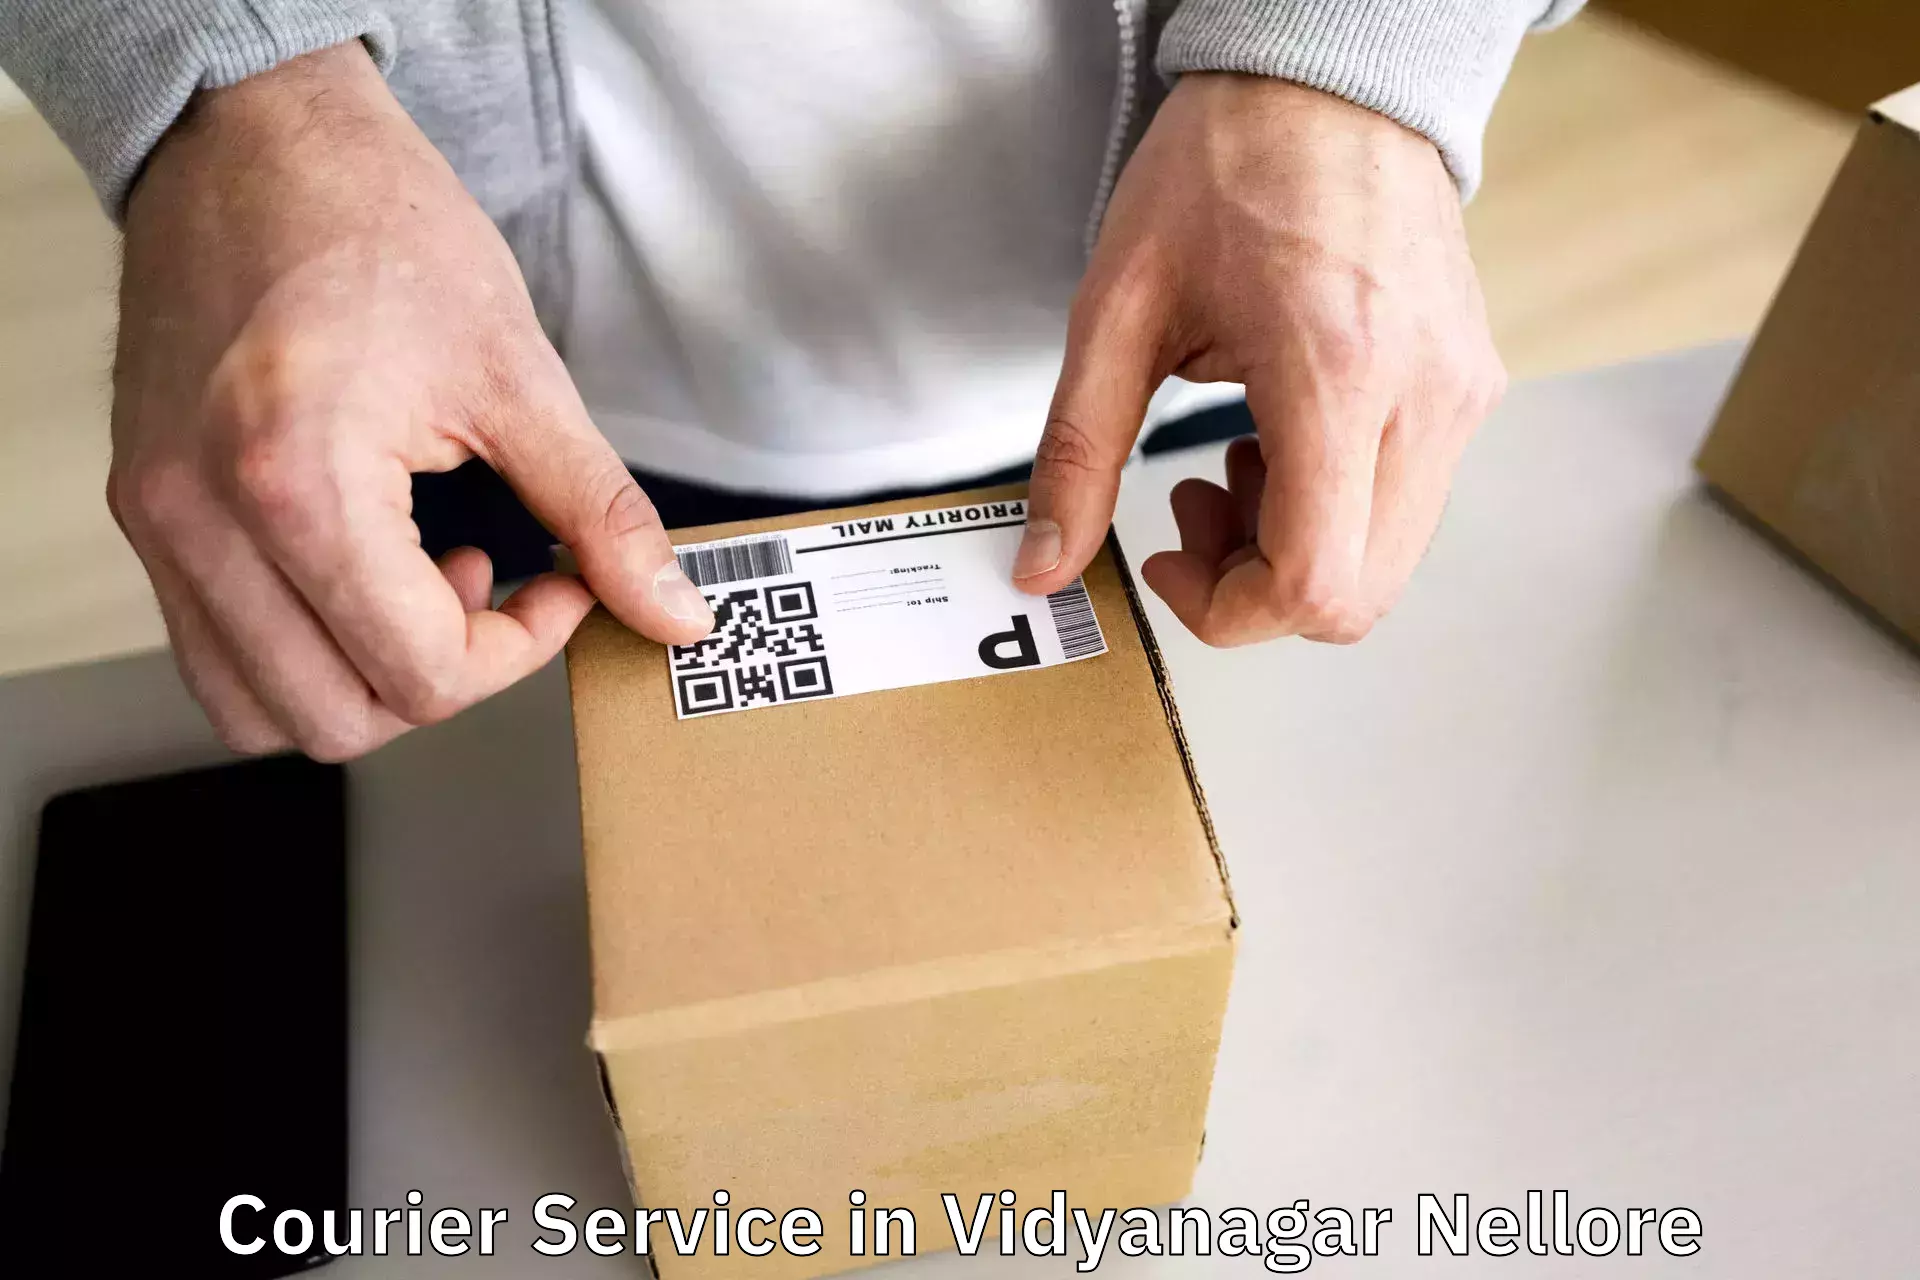 On-demand shipping options in Vidyanagar Nellore